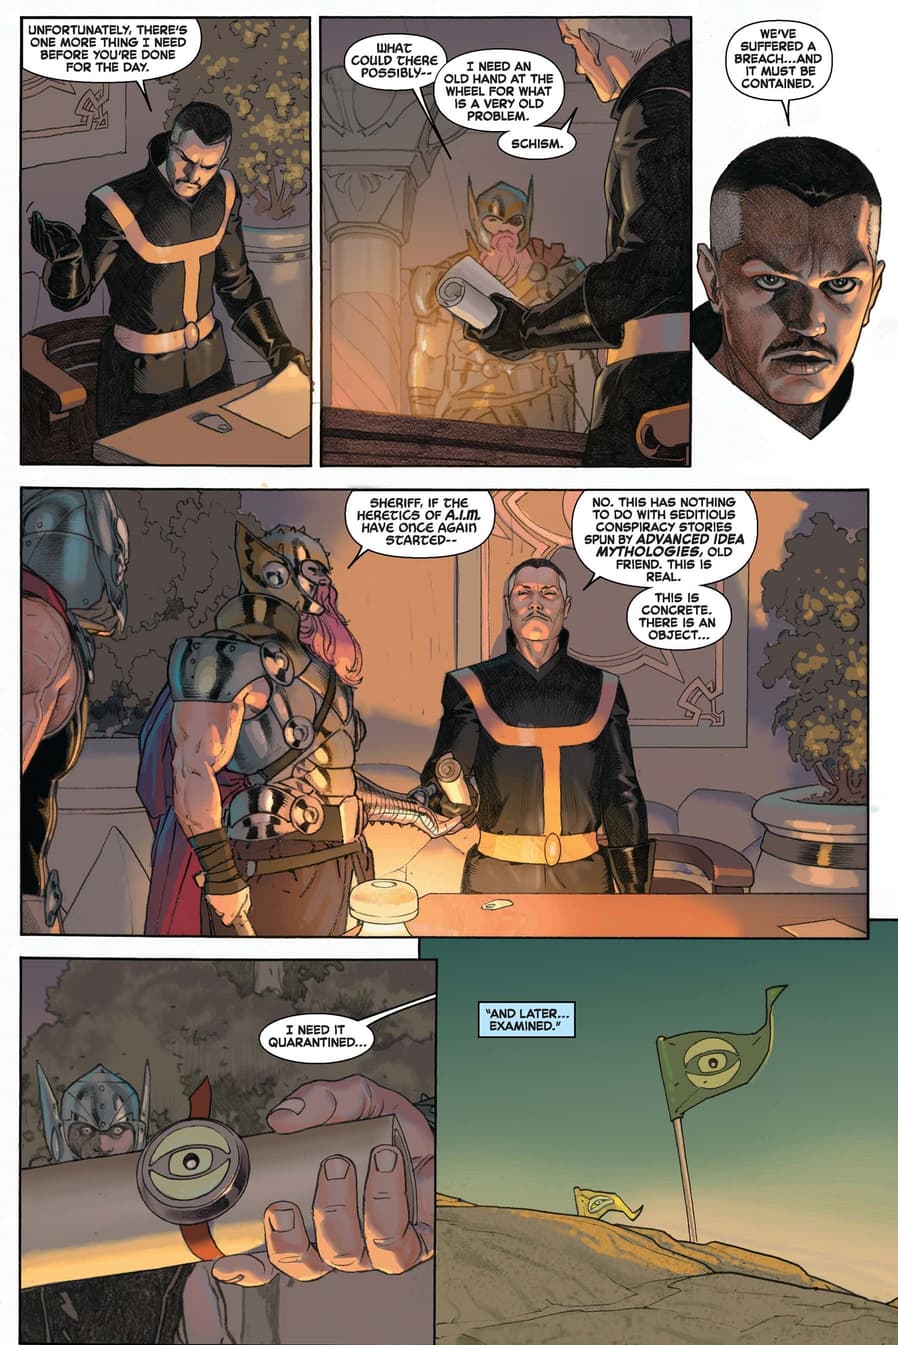 Sheriff Strange gives the orders in SECRET WARS (2015) #2.